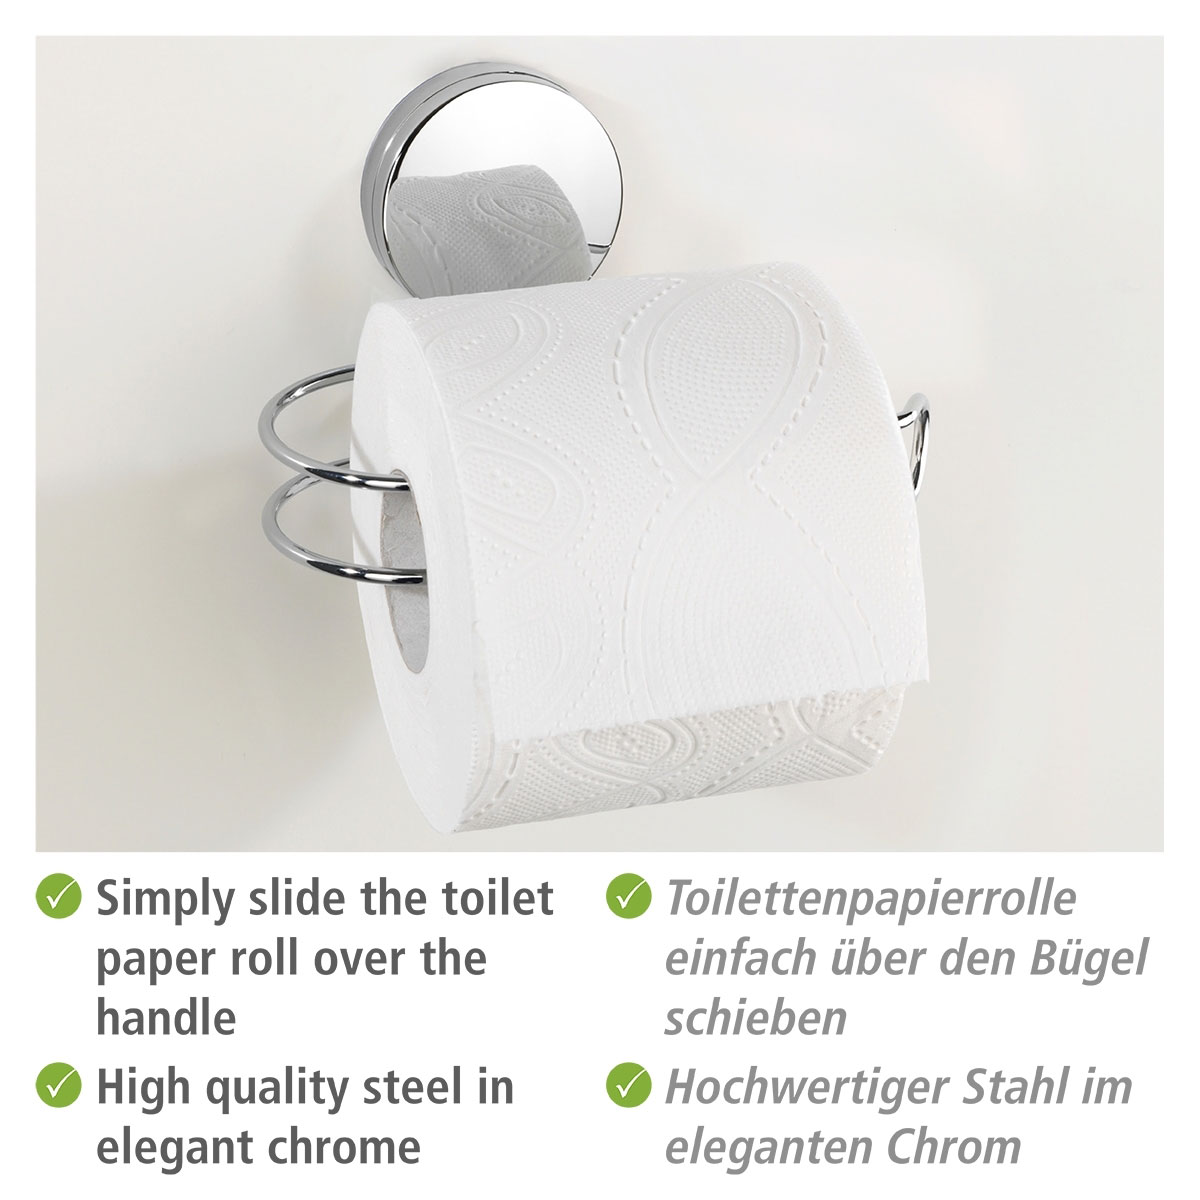 Toilettenpapierhalter „Osimo“, Befestigen ohne bohren, Static-Loc Plus